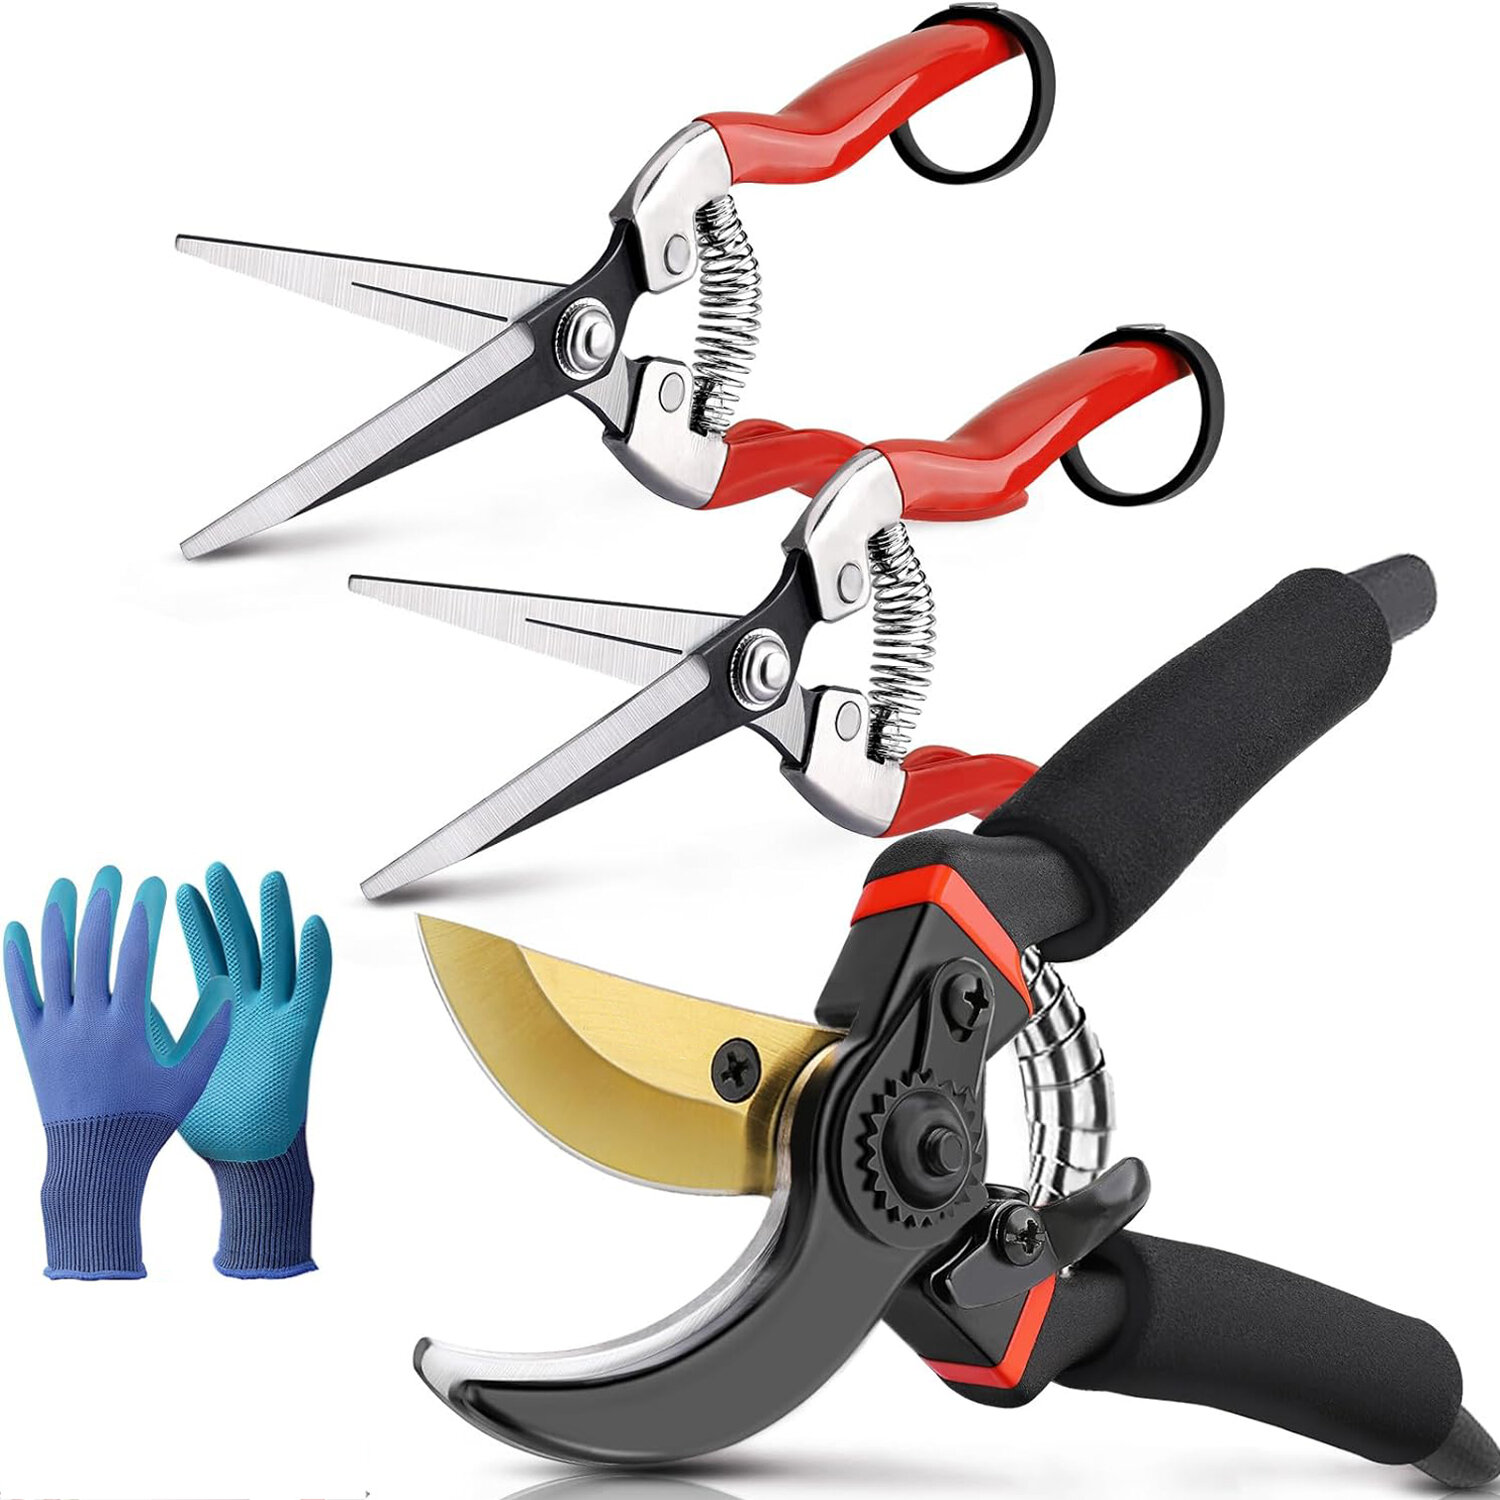 3PCS Professional Garden Secateurs Pruning Kit Stainless Steel Blades Ergonomic Handles Safety Lock Hand Protection Glov